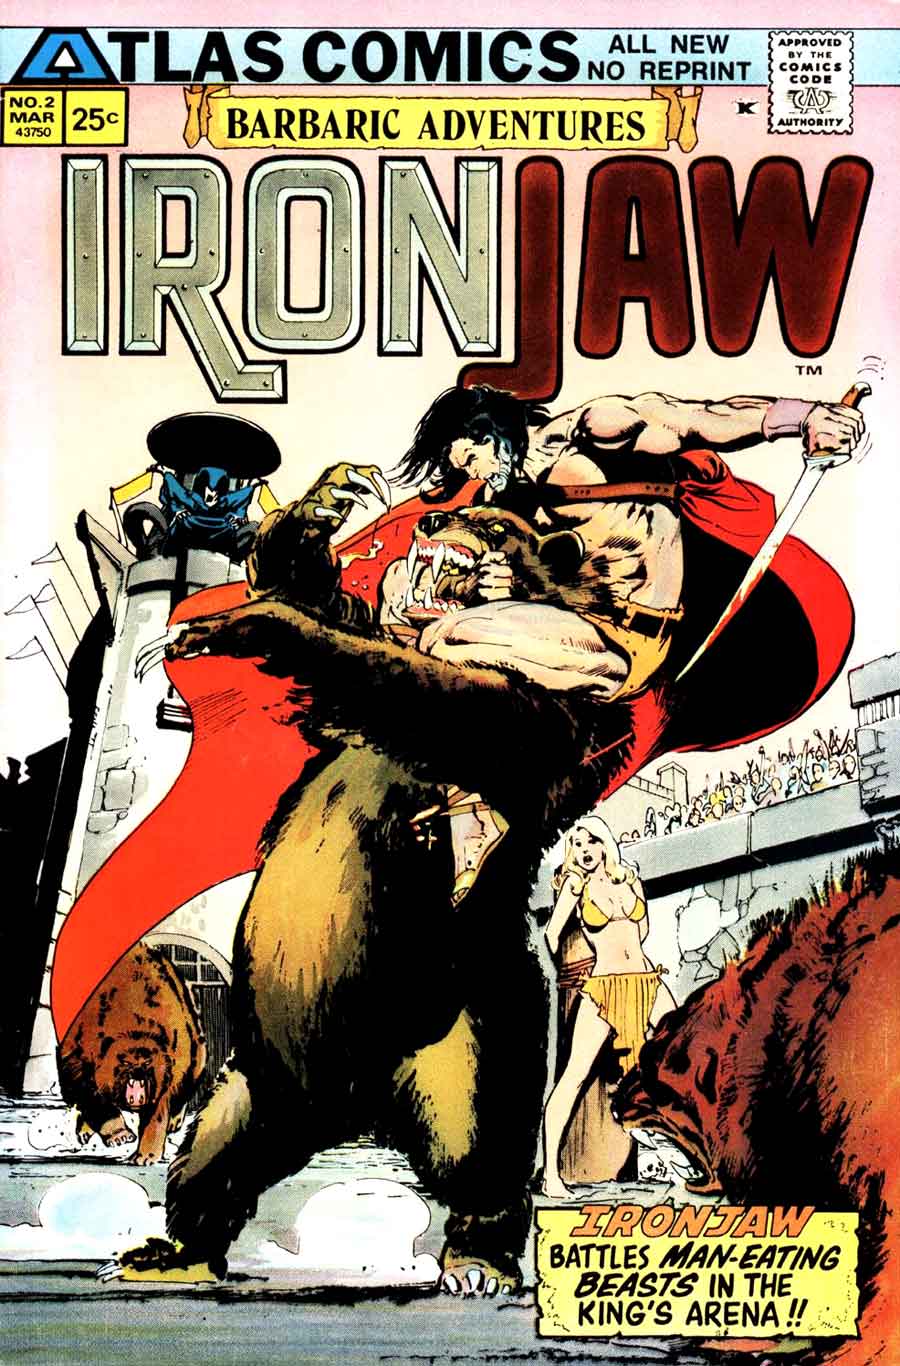 Ironjaw v1 #2 atlas seaboard comic book cover art by Neal Adams